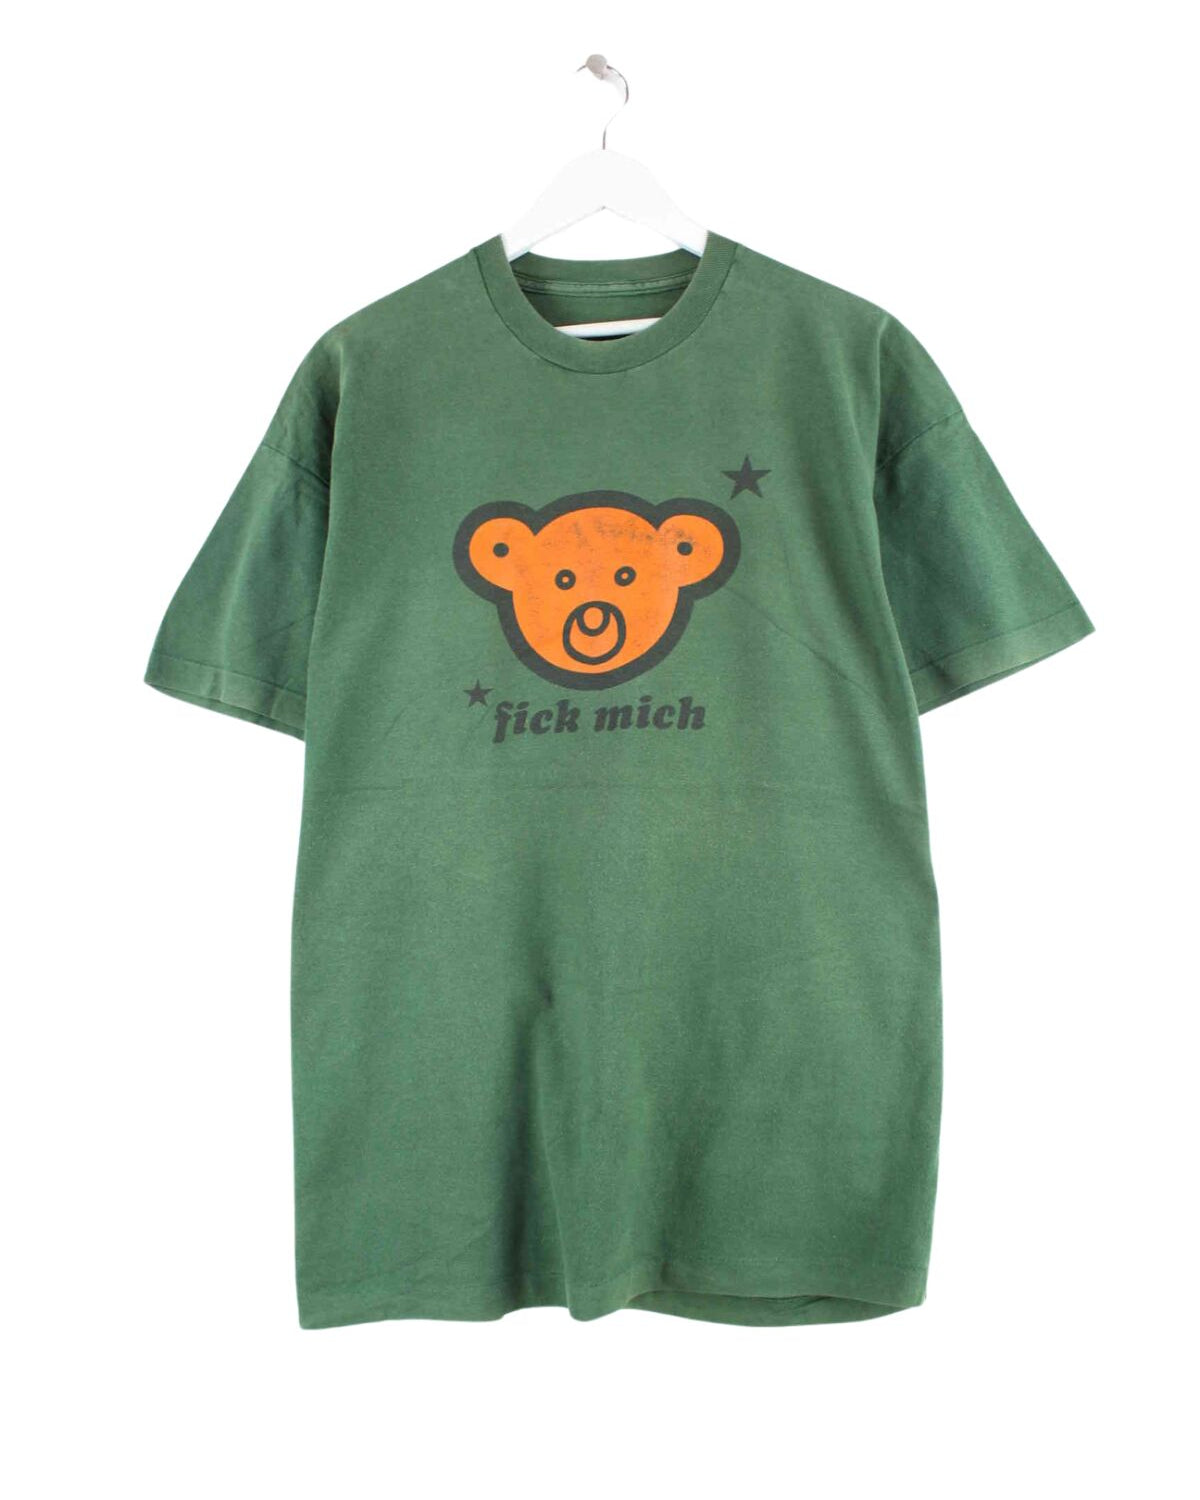 Vintage 90s Funny Teddy Print Single Stitched T-Shirt Grün L (front image)